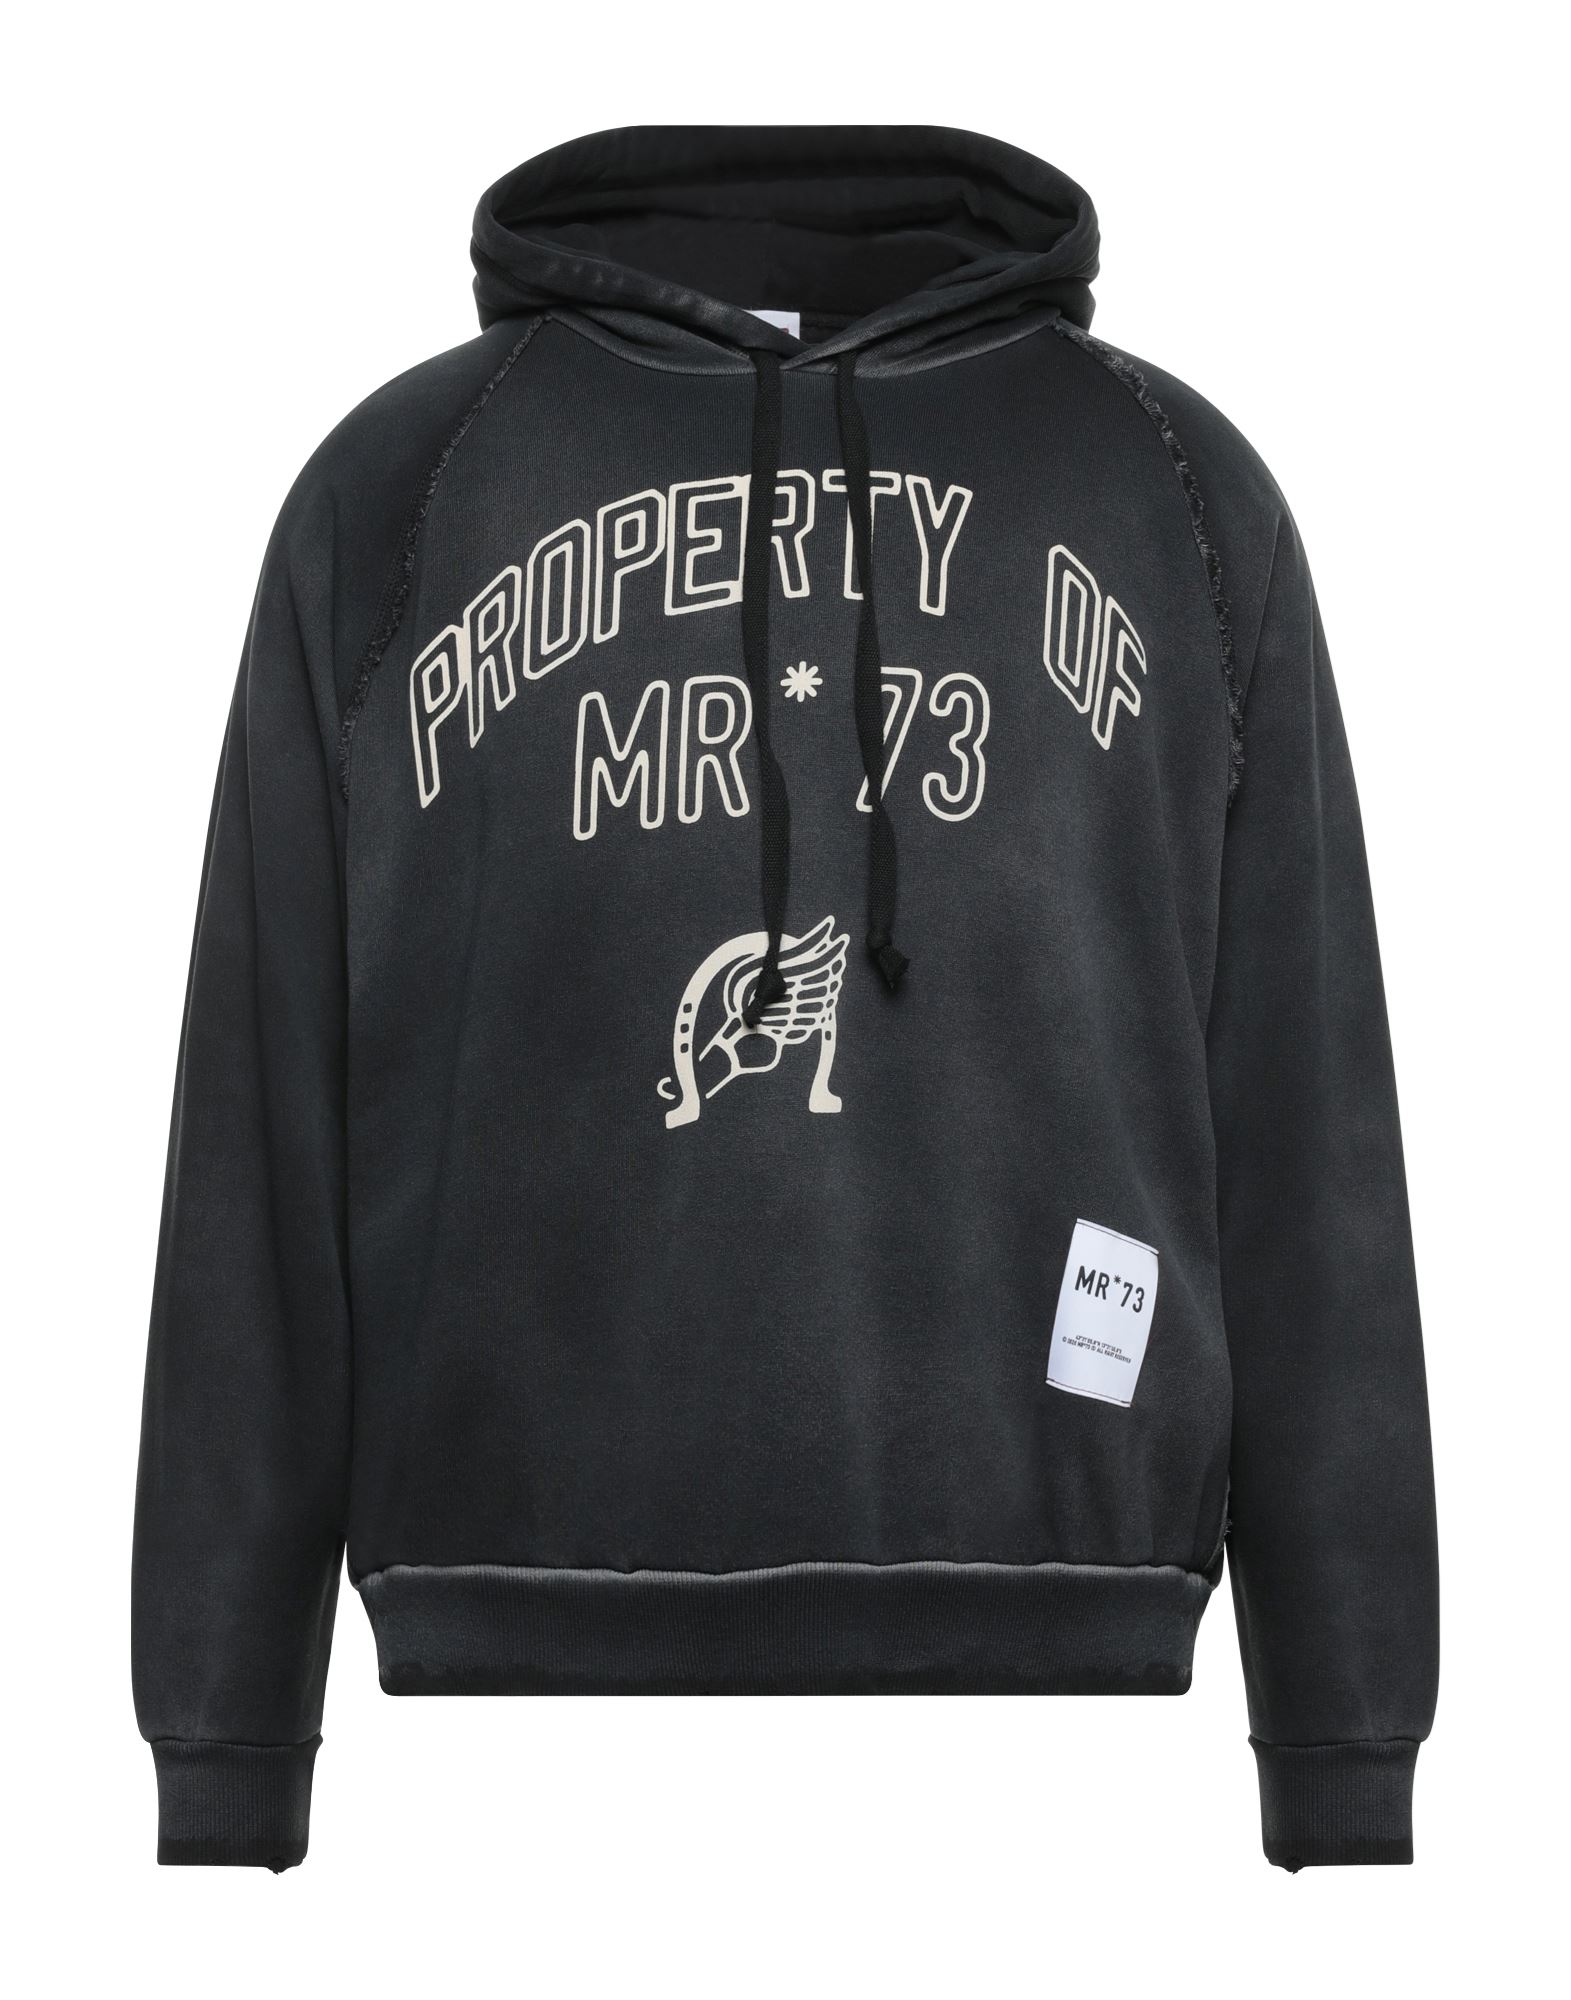 Mr73 Mr*73 Man Sweatshirt Lead Size Xl Cotton In Grey